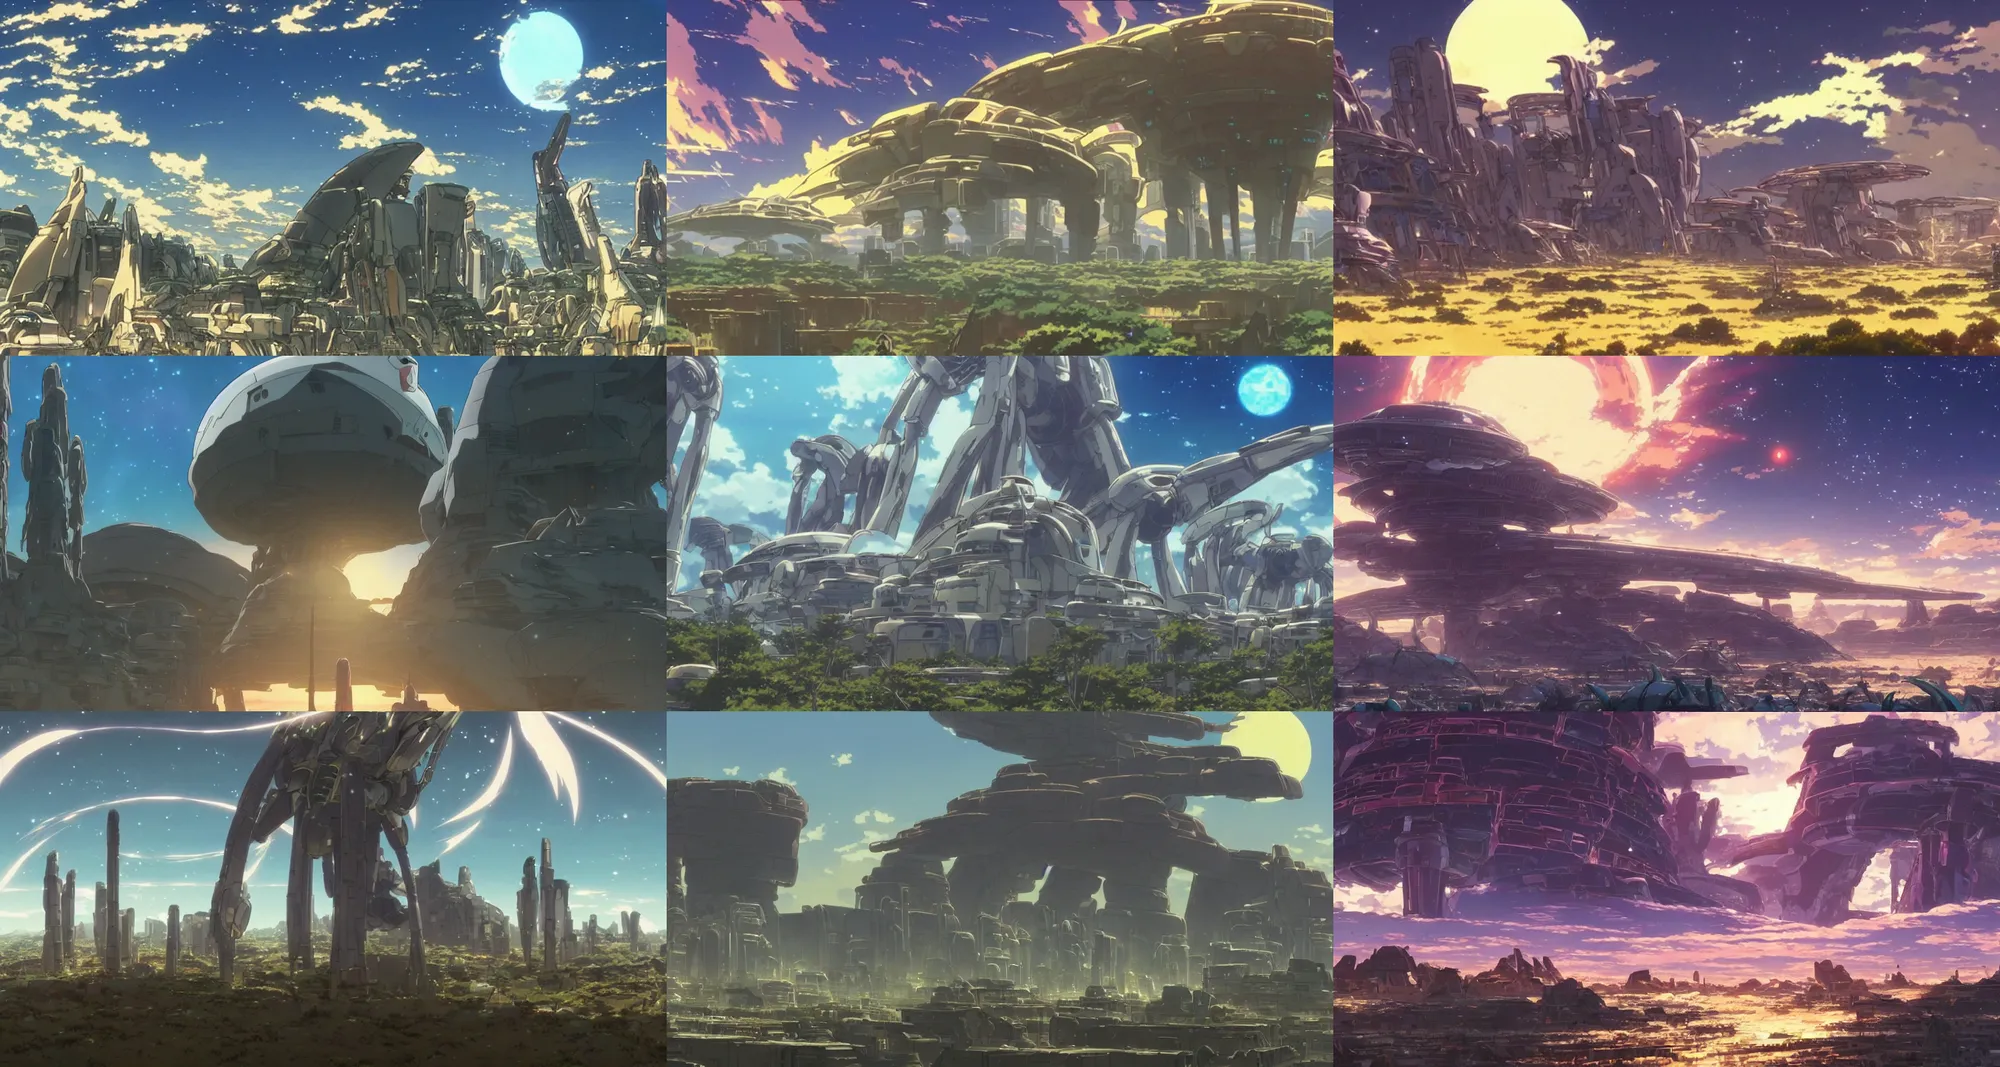 Prompt: screenshot from the award-winning science fiction anime film by makoto shinkai, towering ruins of alien megastructures, desert alien planet, from the anime film by studio ghibli